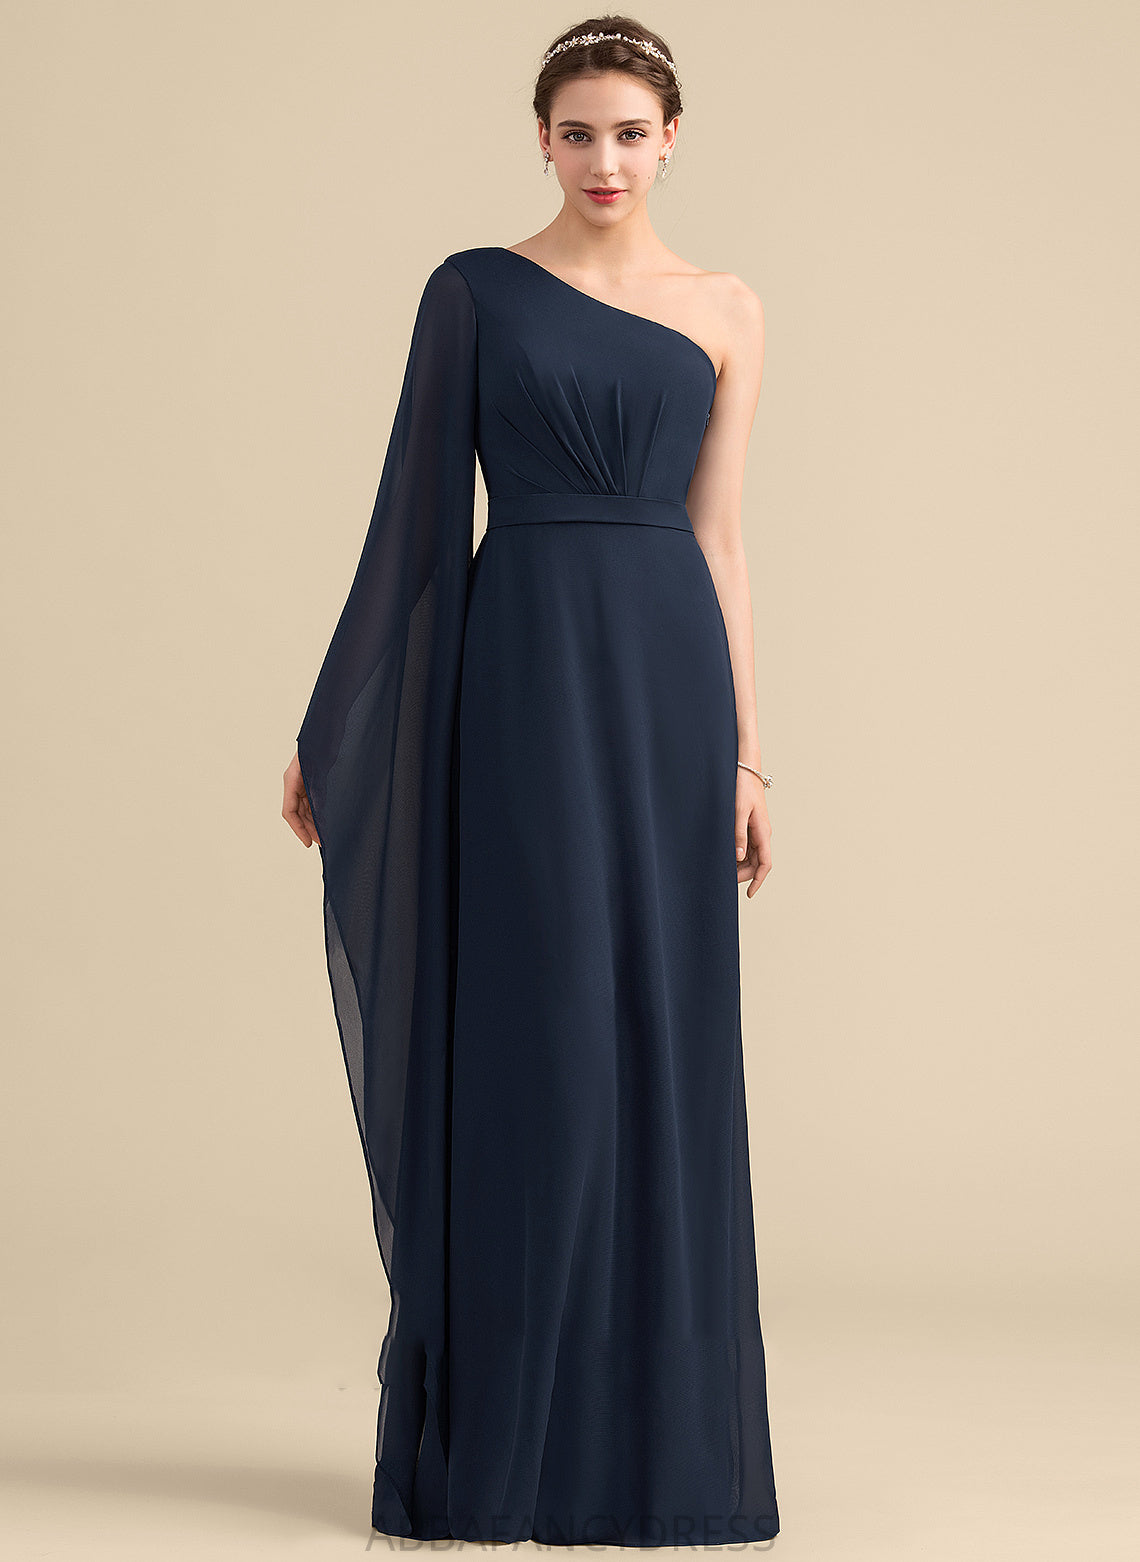 Embellishment Ruffle A-Line Silhouette Fabric Length One-Shoulder Floor-Length Neckline Sasha Velvet Trumpet/Mermaid